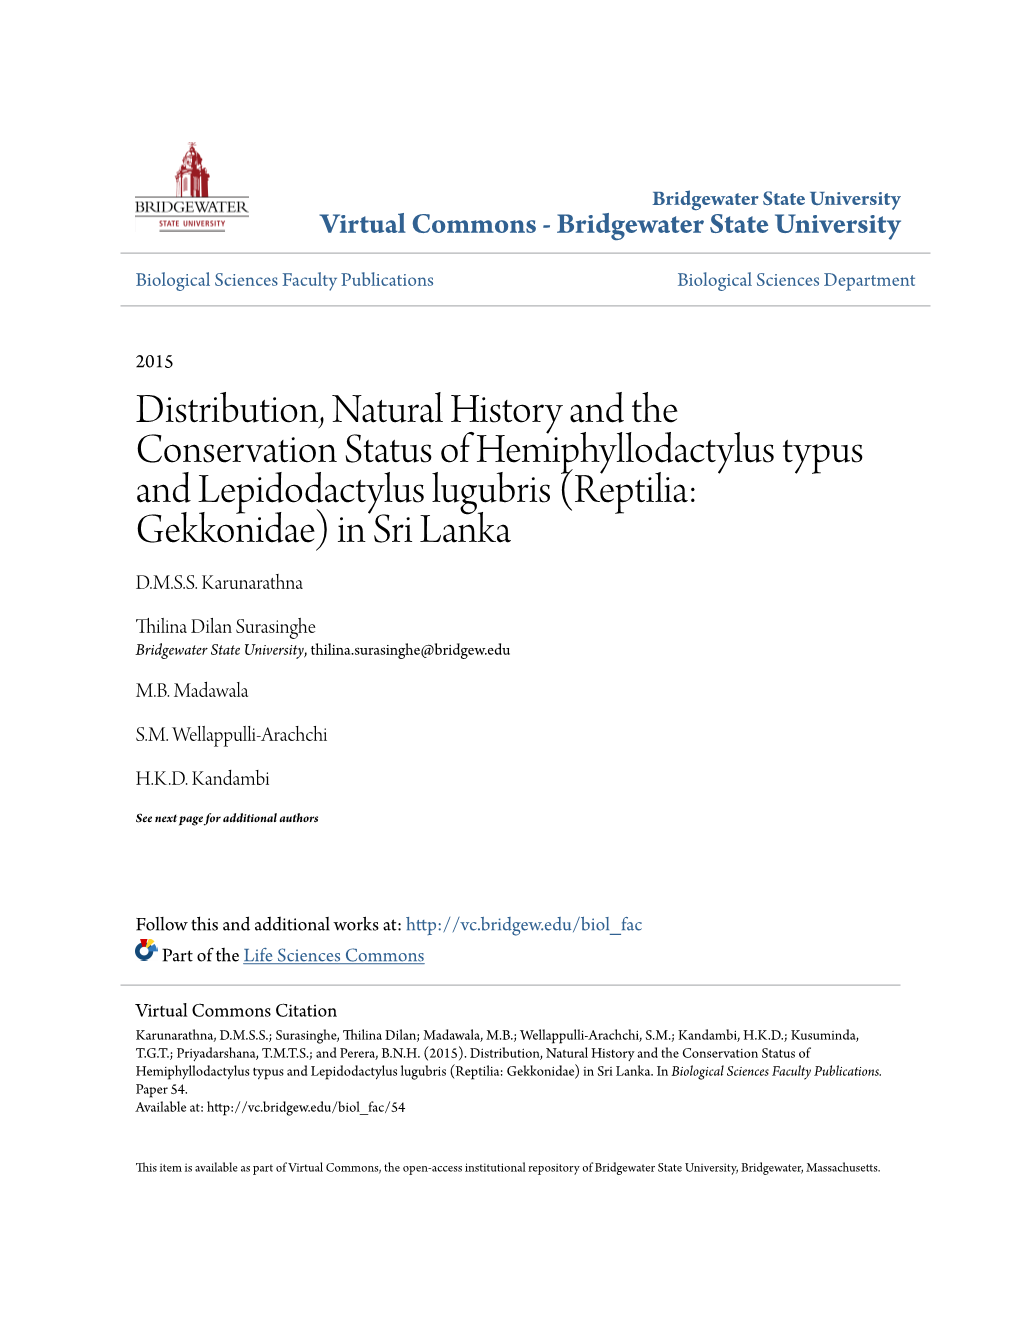 Distribution, Natural History and the Conservation Status of Hemiphyllodactylus Typus and Lepidodactylus Lugubris (Reptilia: Gekkonidae) in Sri Lanka D.M.S.S